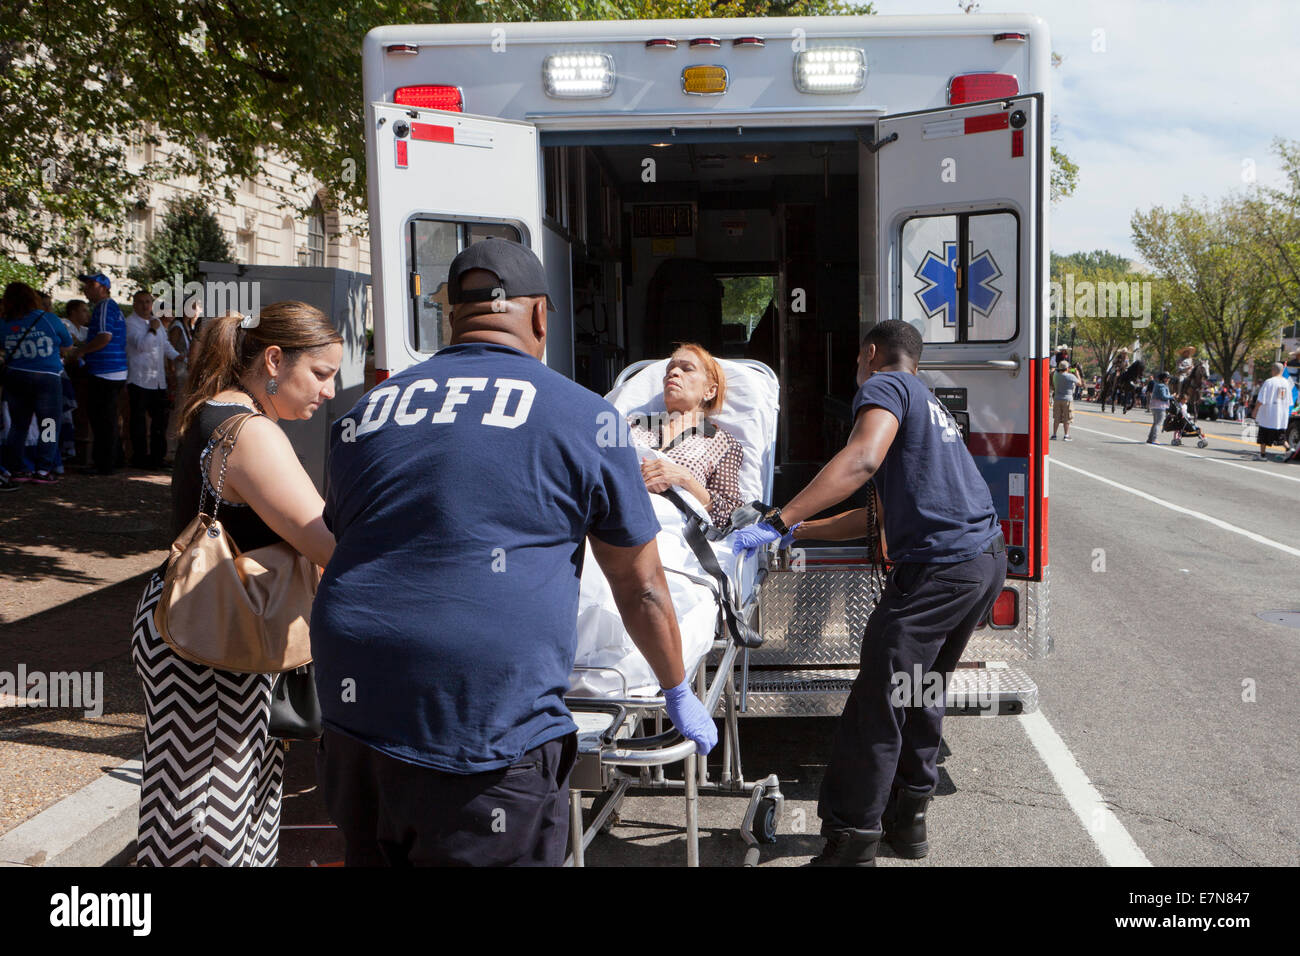 DCFD EMT loading patient into ambulance - Washington, DC USA Stock Photo